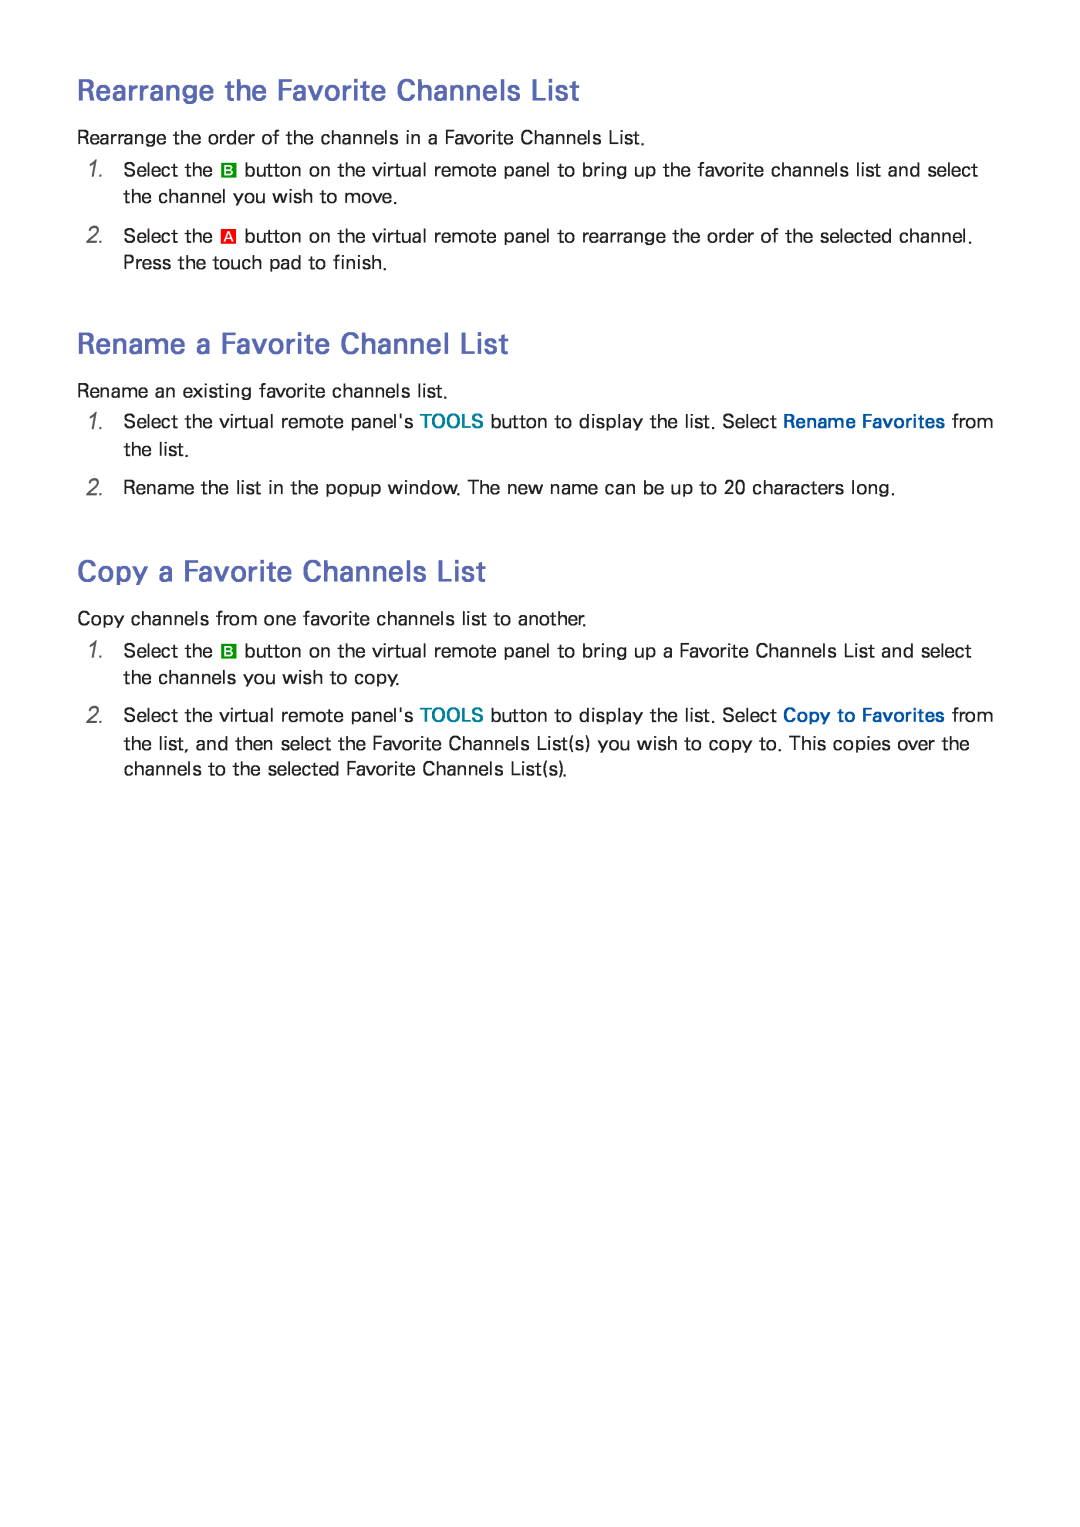 Samsung UN65F8000 Rearrange the Favorite Channels List, Rename a Favorite Channel List, Copy a Favorite Channels List 